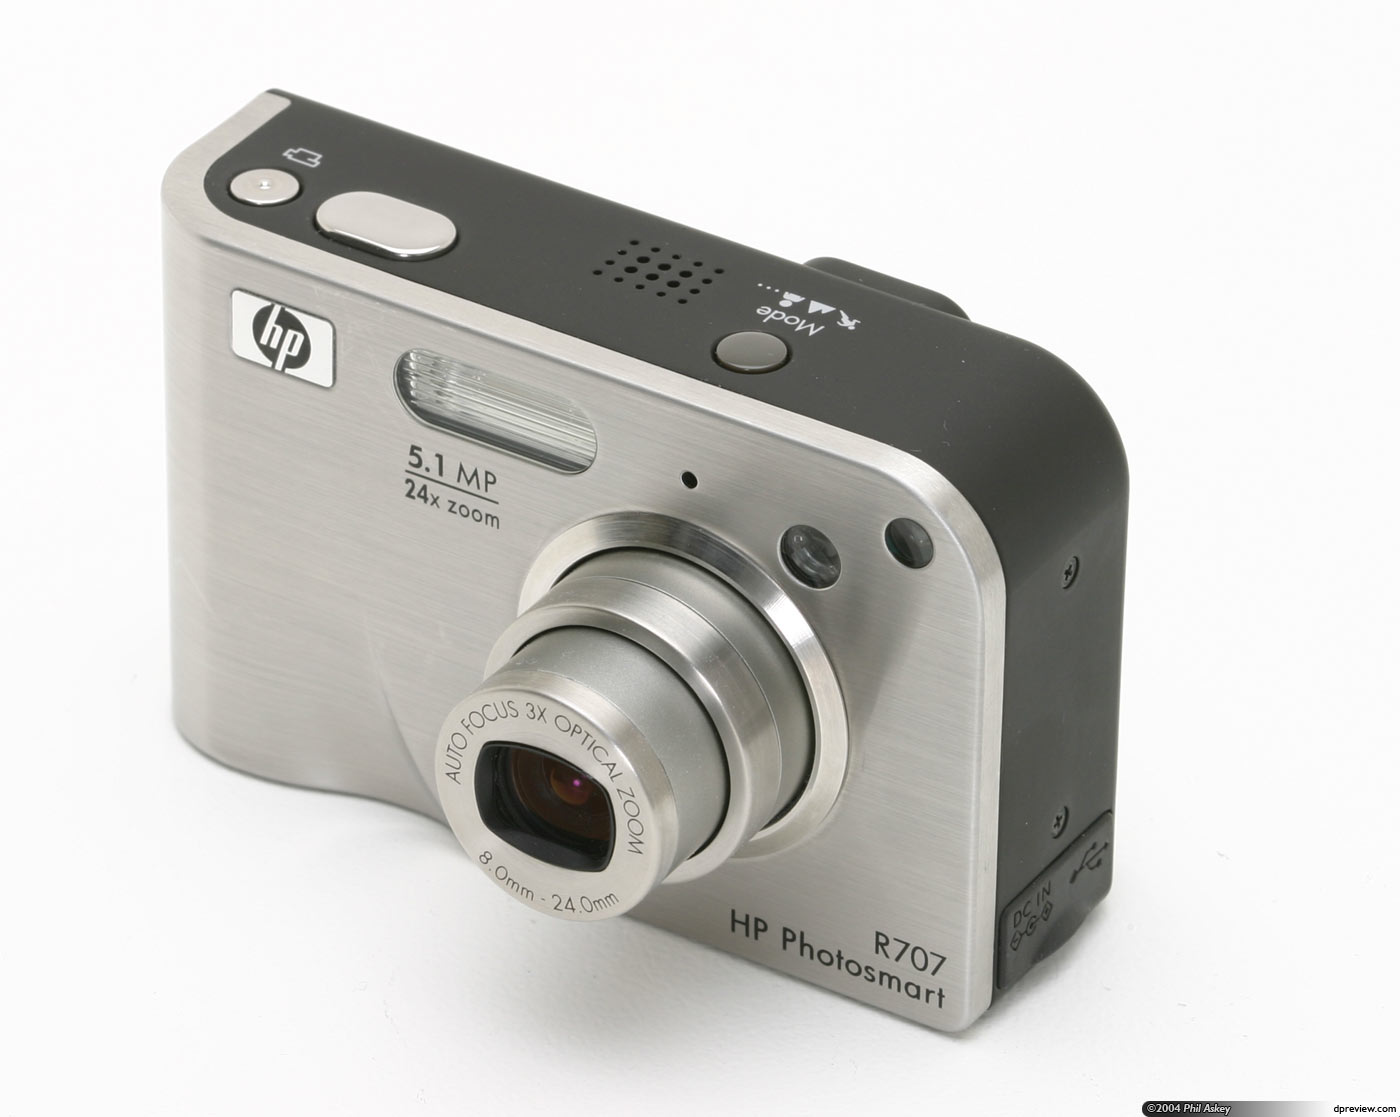 HP PhotoSmart R707 Digital Camera